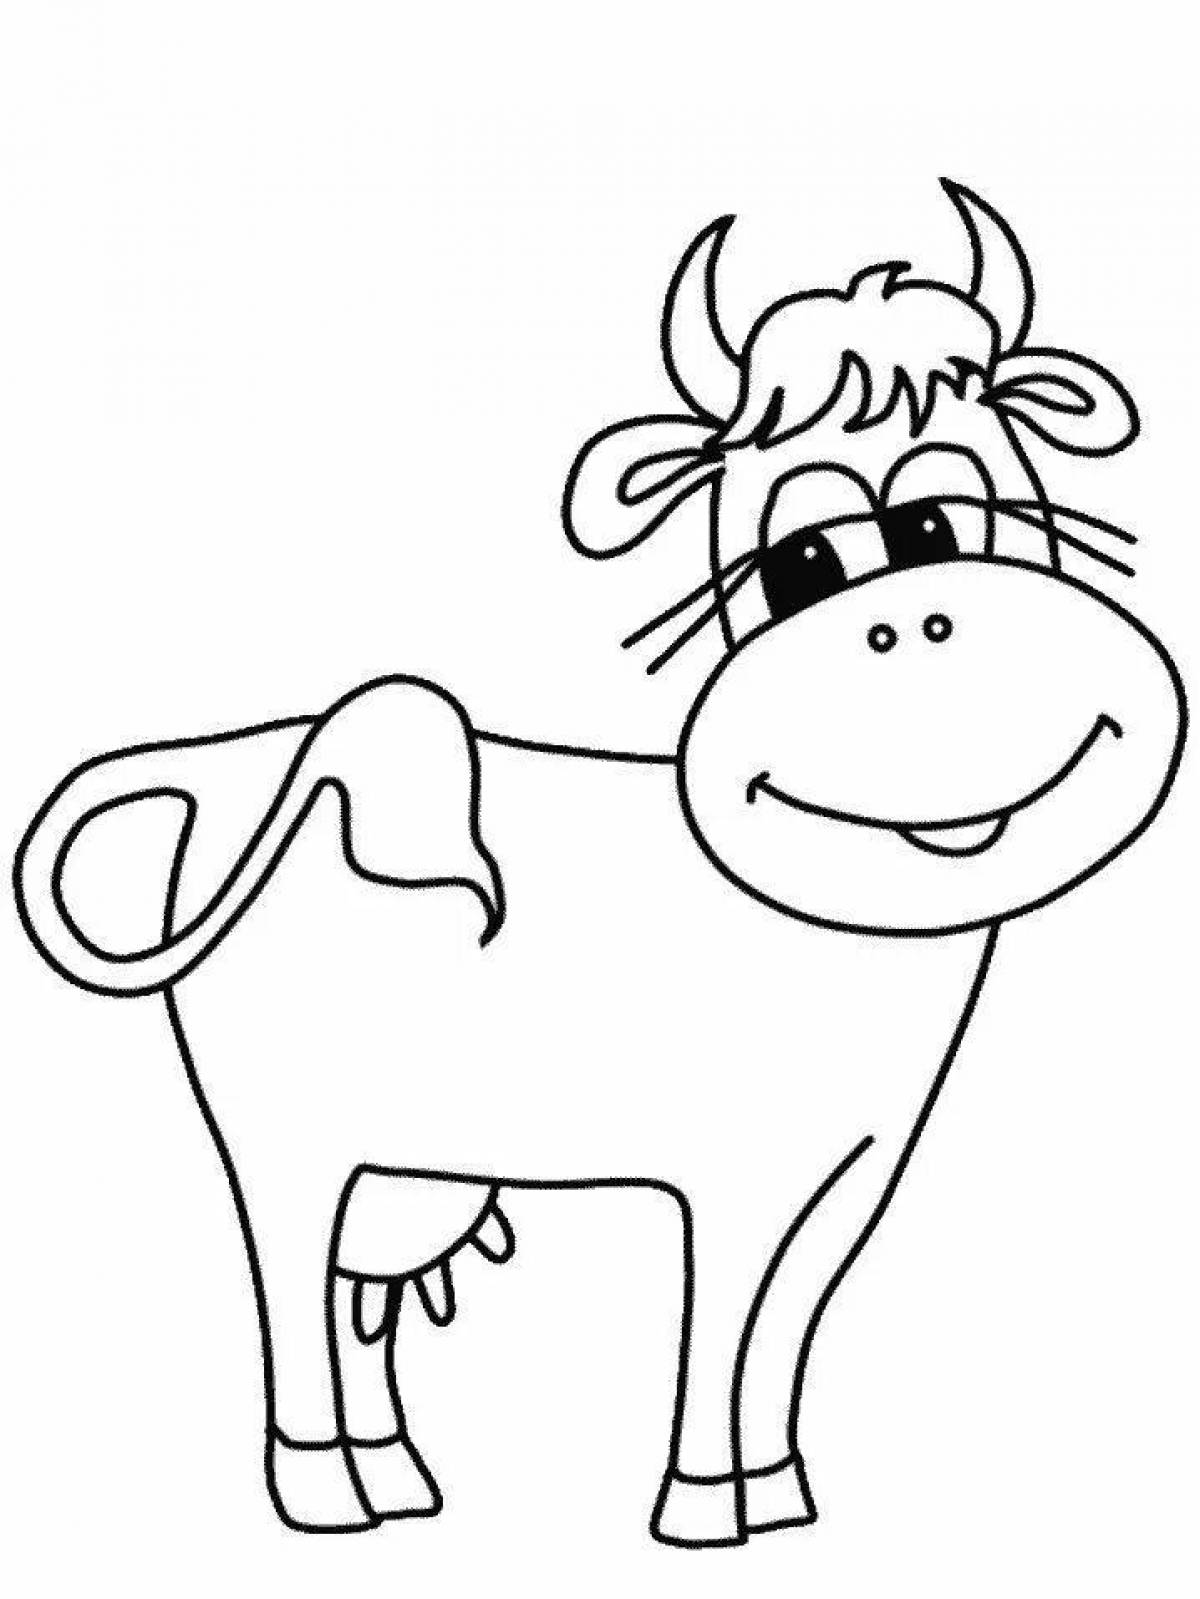 Cow #2